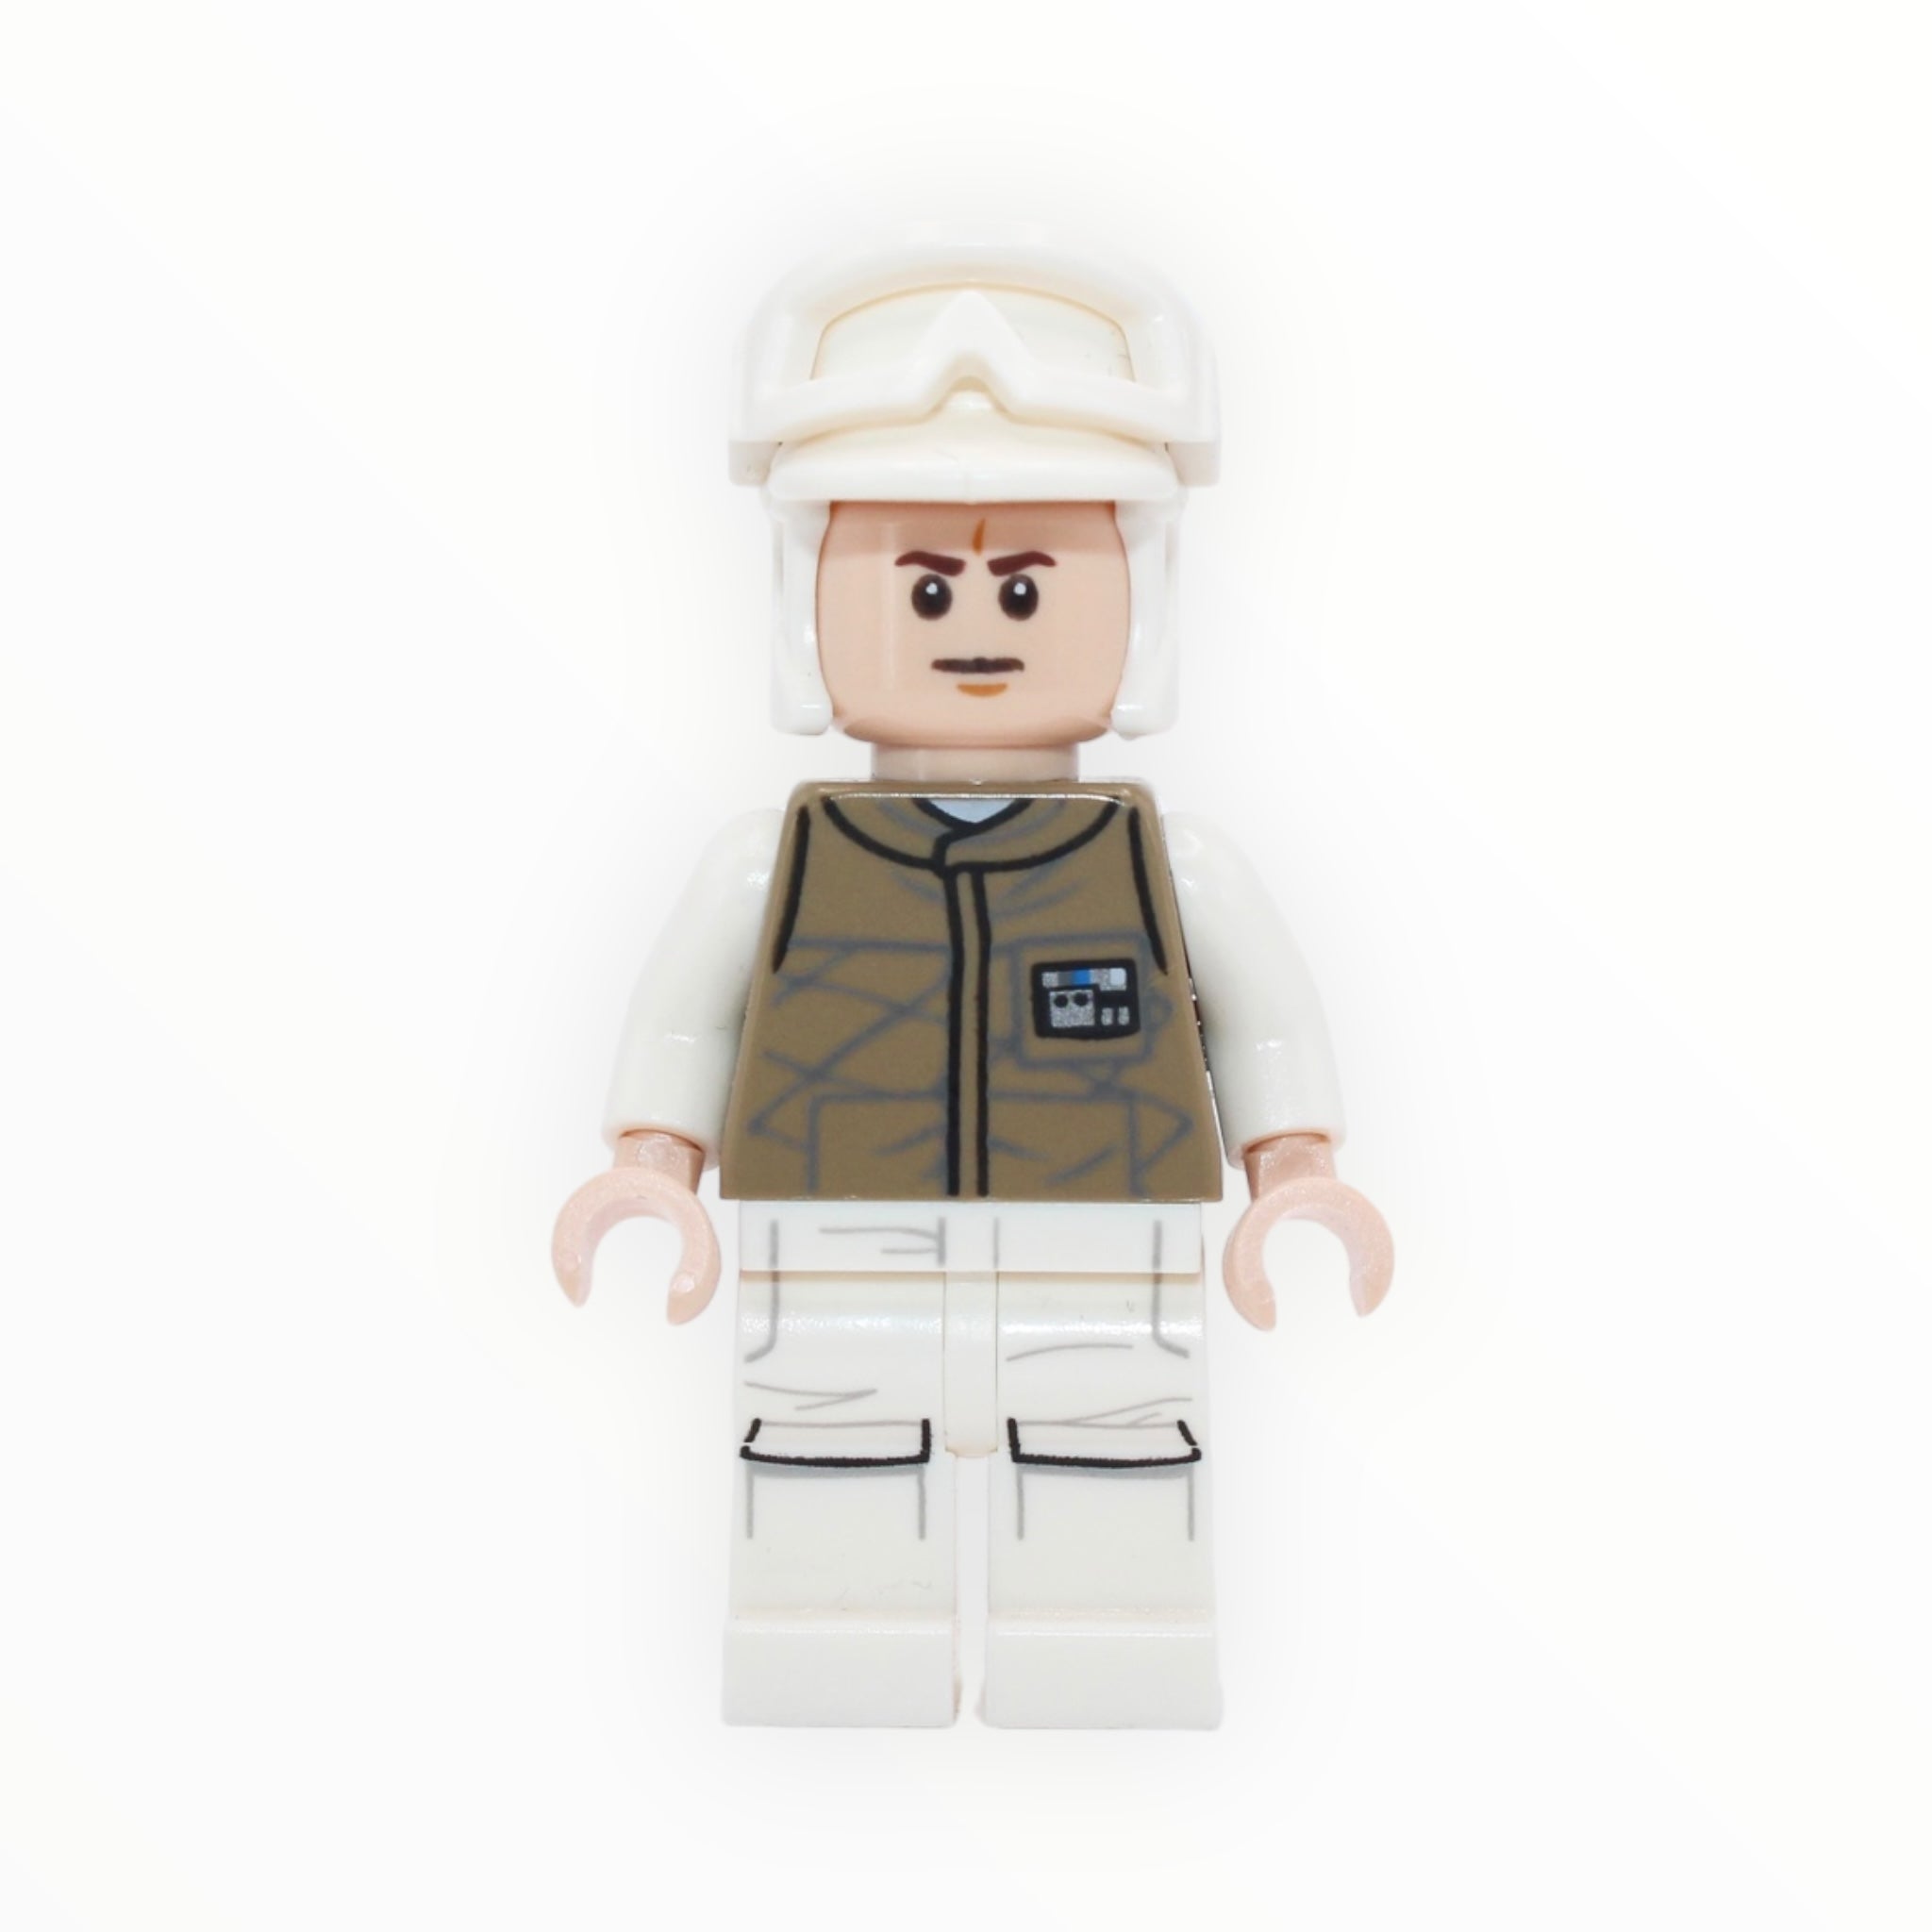 Hoth Rebel Trooper (dark tan uniform, white hat, frown, printed white legs, 2016)